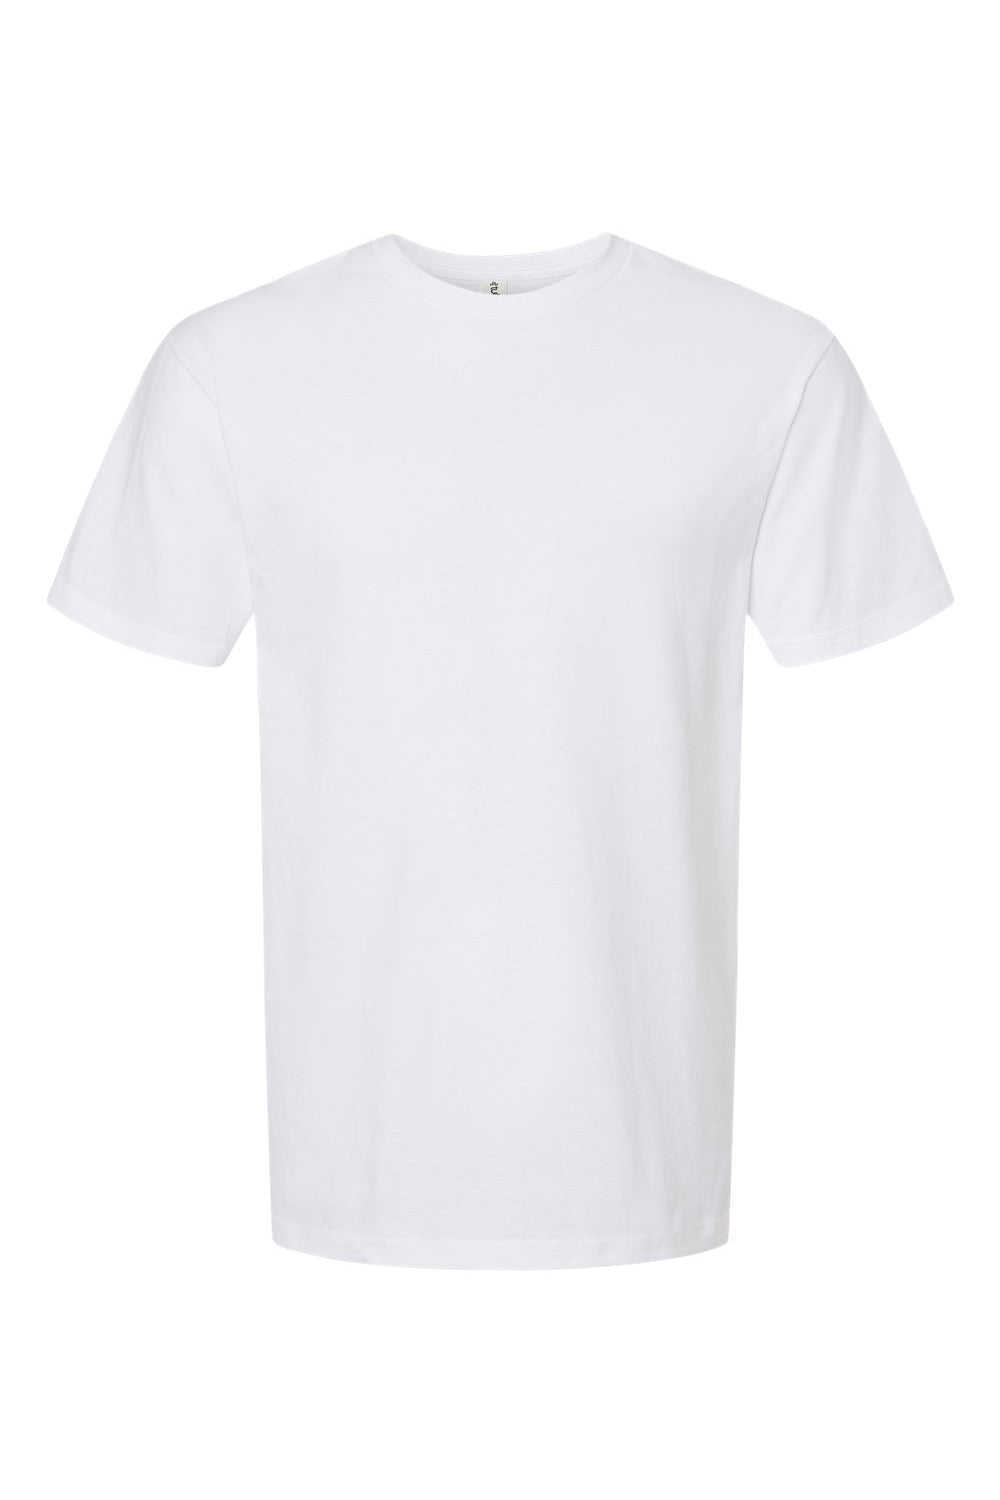 Tultex 290 Mens Jersey Short Sleeve Crewneck T-Shirt White Flat Front